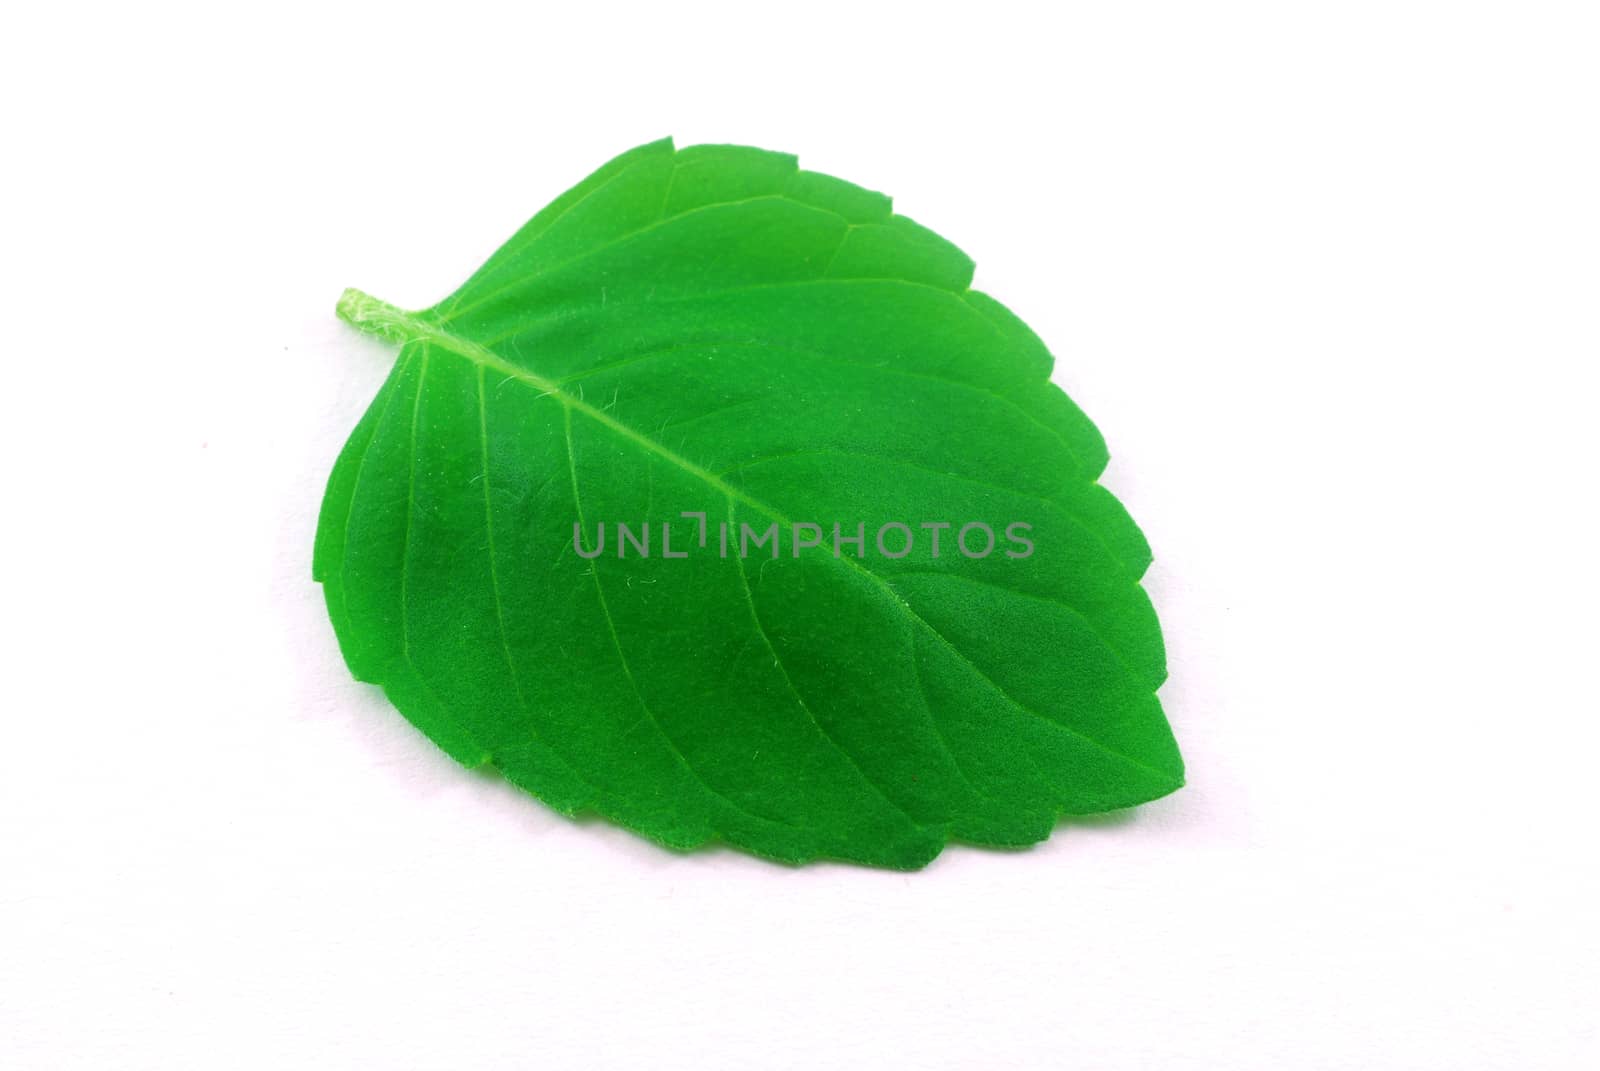 fresh green holy basil Ocimum tenuiflorum leaves by nikonite